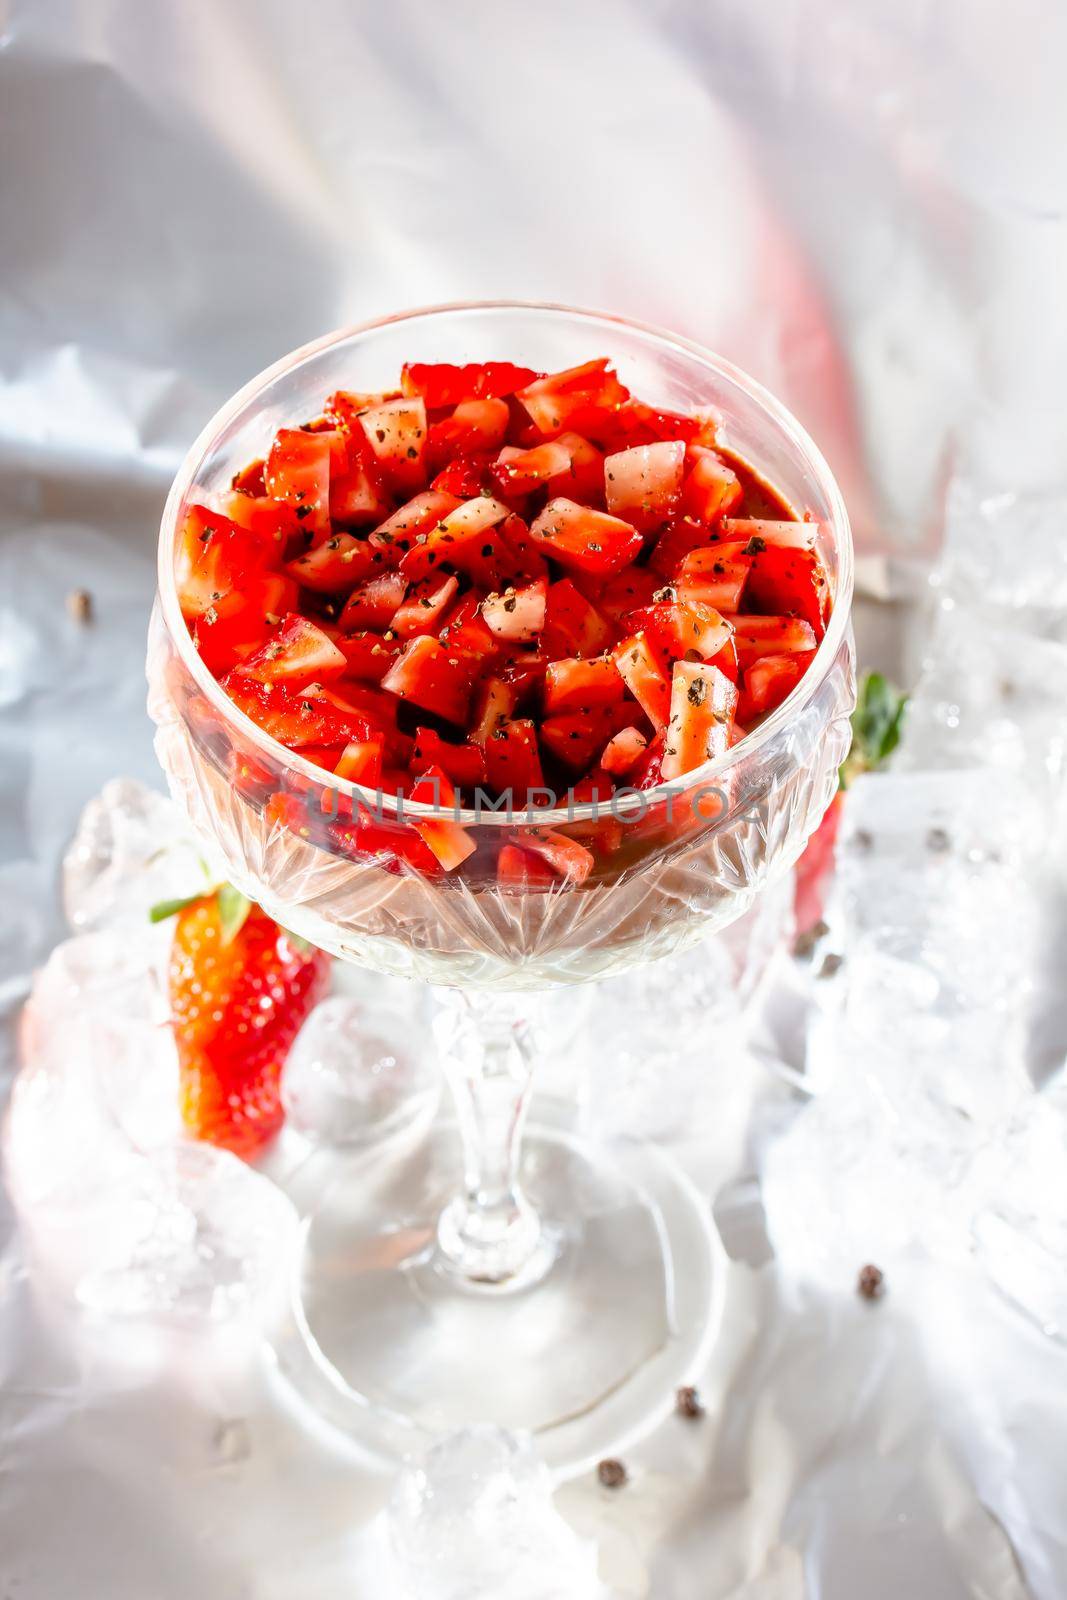 luxurious dessert Tiramisu in a glass with coffee beans, tiramisu with chocolate and strawberries by Milanchikov